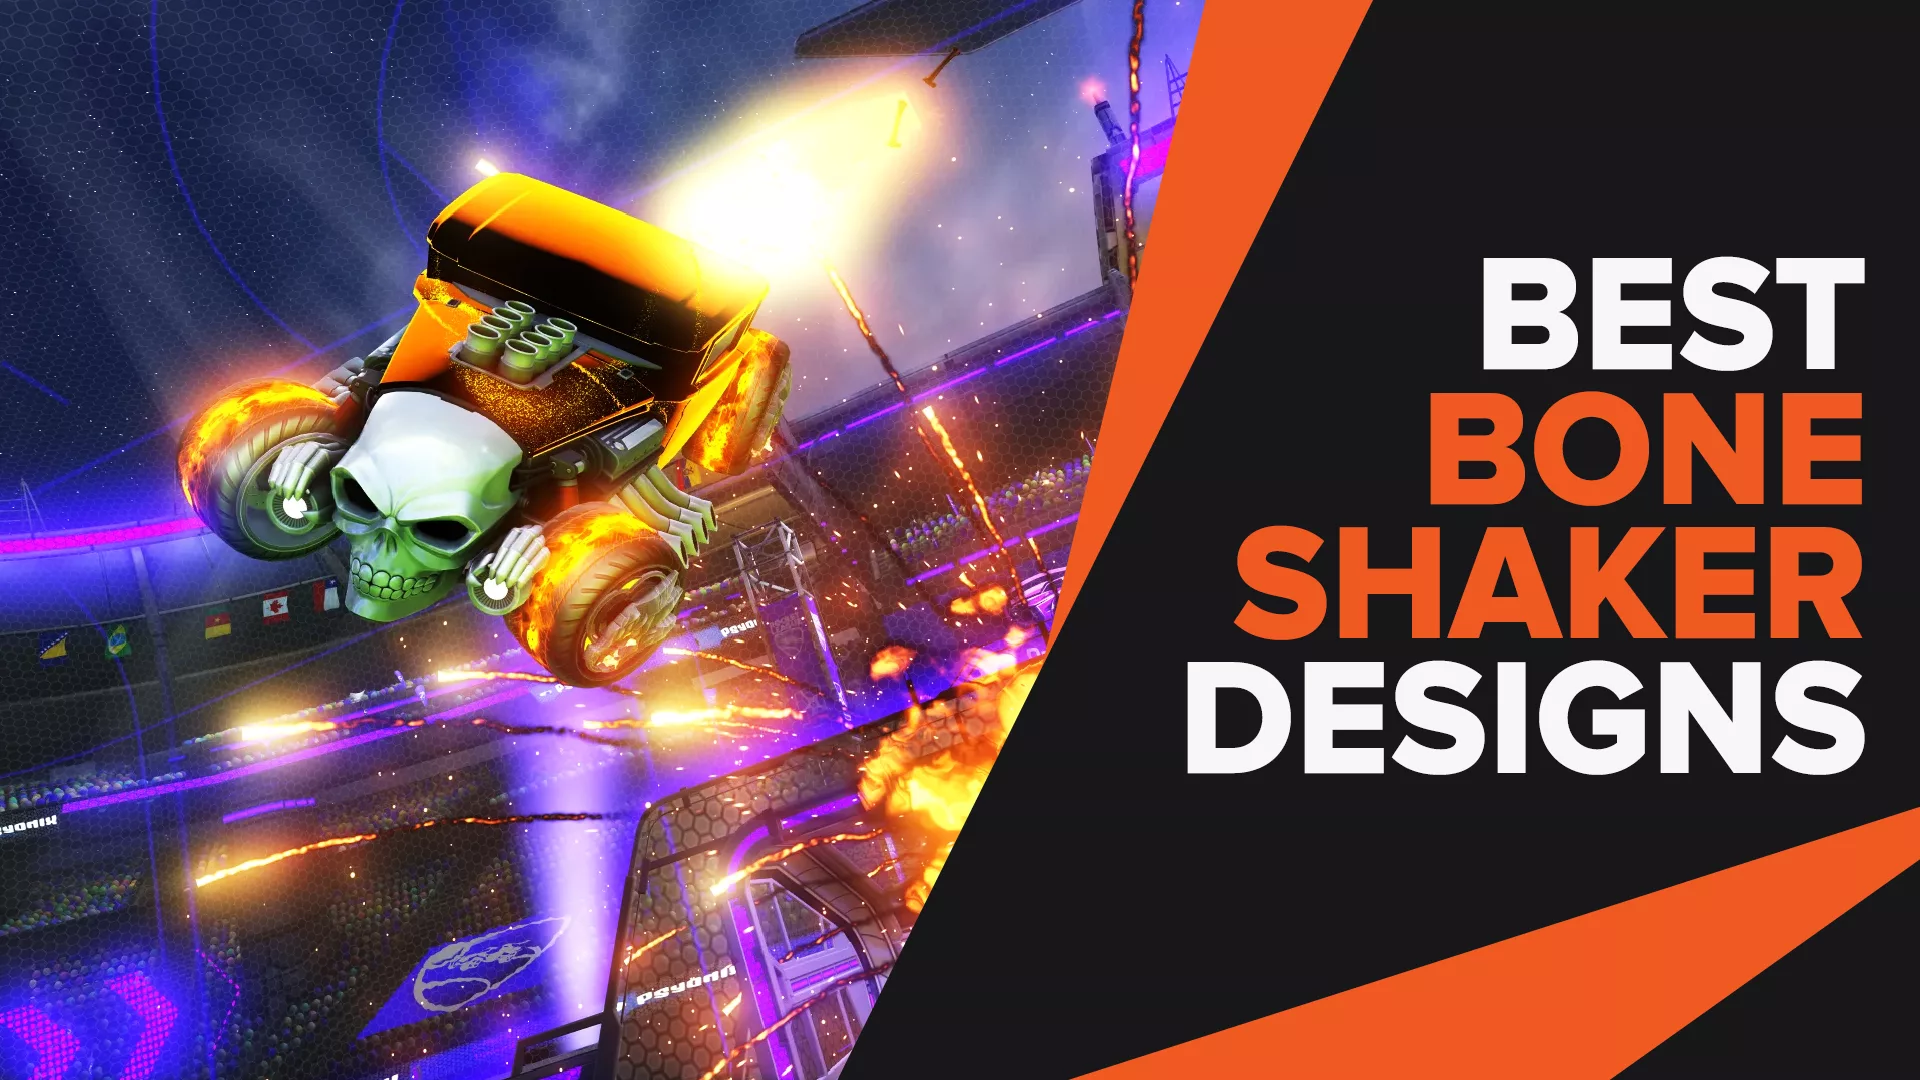 Best Bone Shaker Designs to get inspired in Rocket League